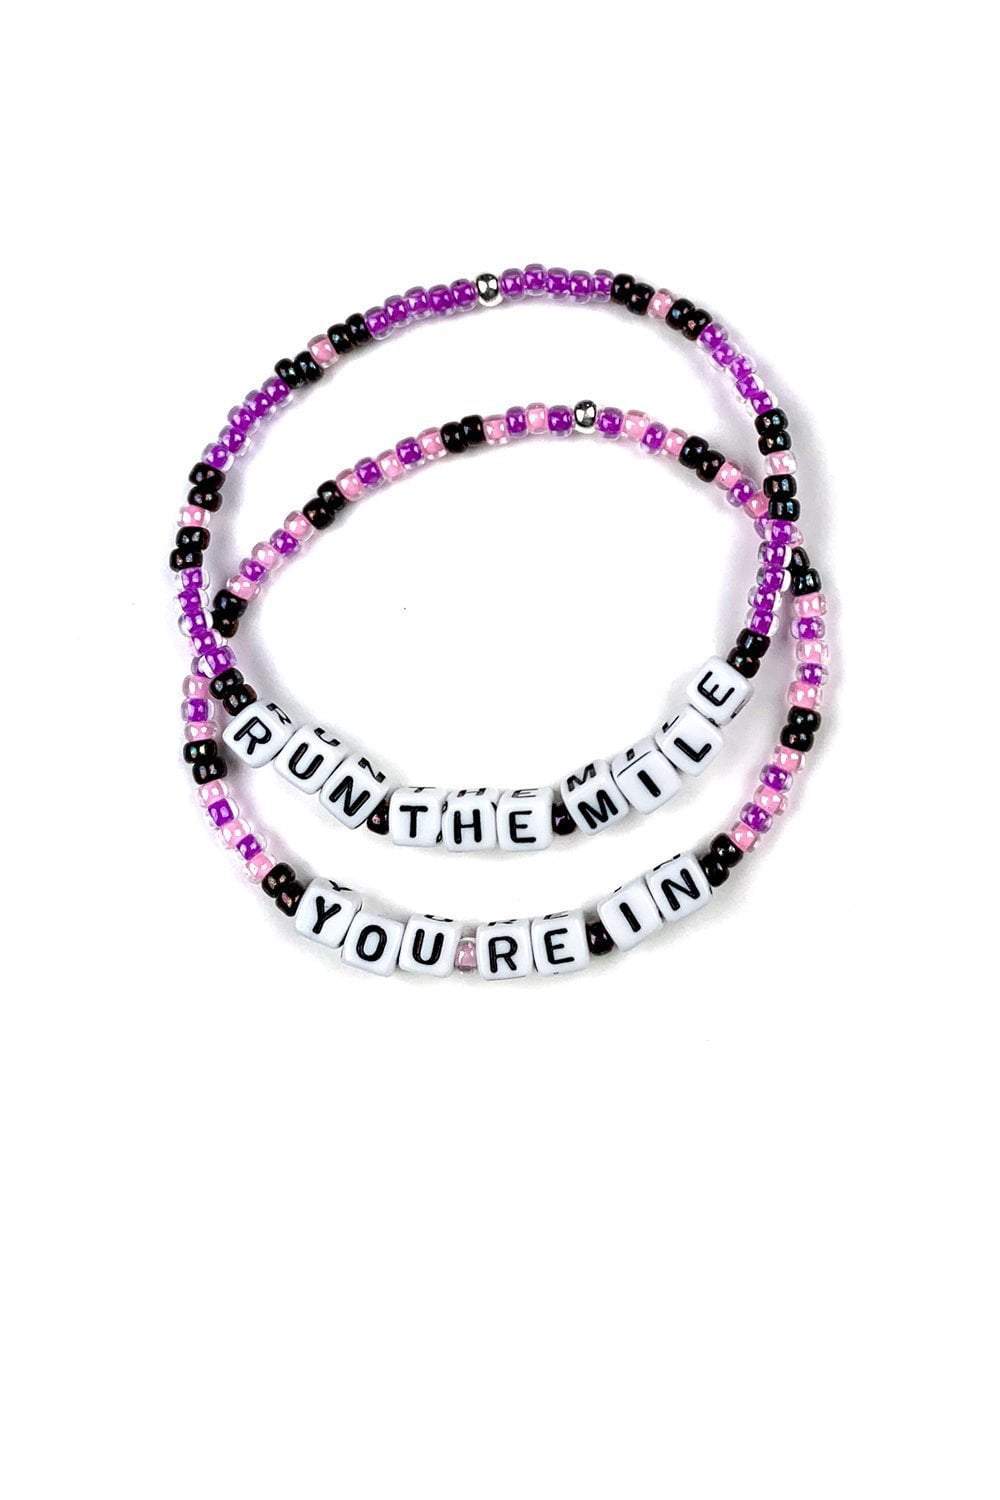 Sarah Marie Design Studio Bracelet Run The Mile You're In Bracelet